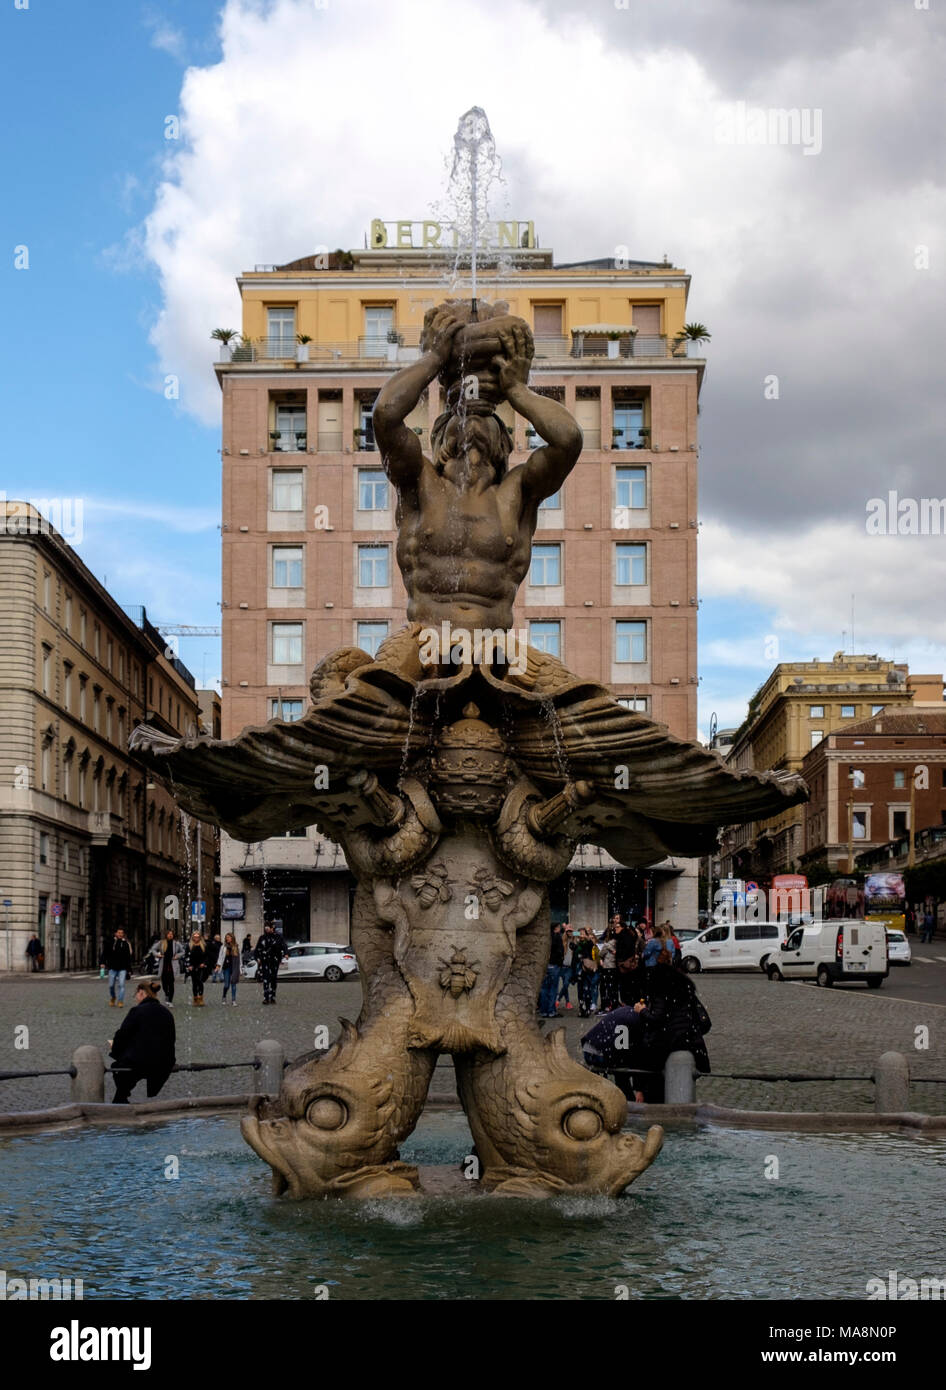 The Fontana del Tritone, Fountain of Trirton situated in Piazza Barberini in the heart of Rome, Italy Stock Photo